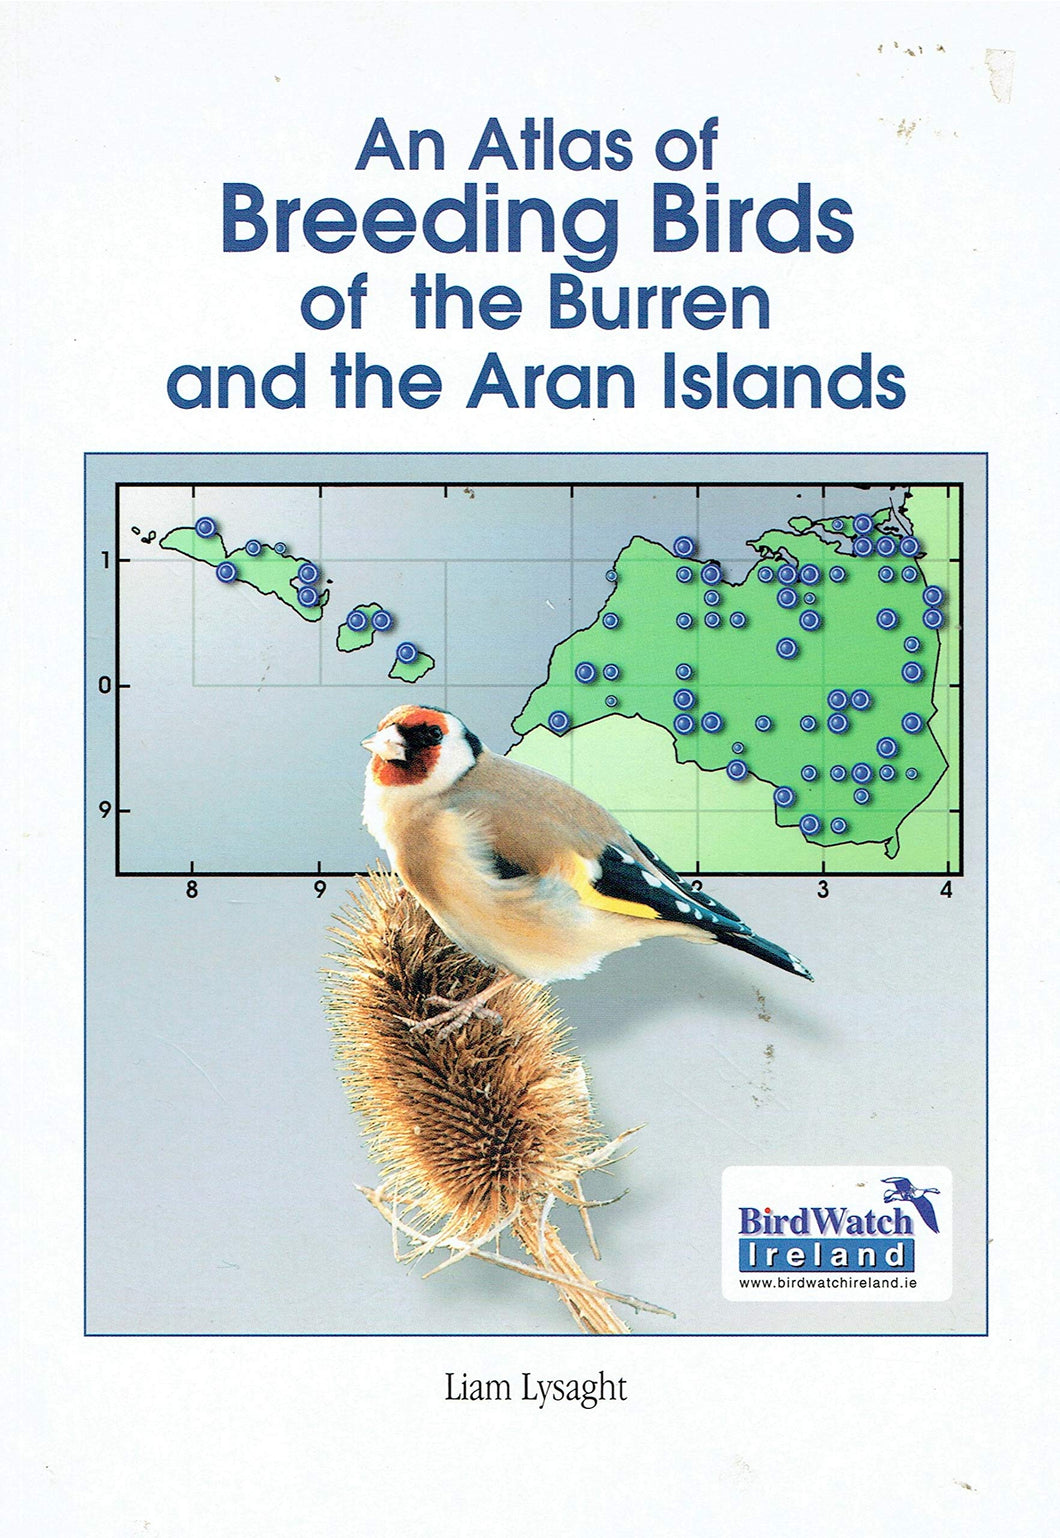 An atlas of breeding birds of the Burren and the Aran Islands